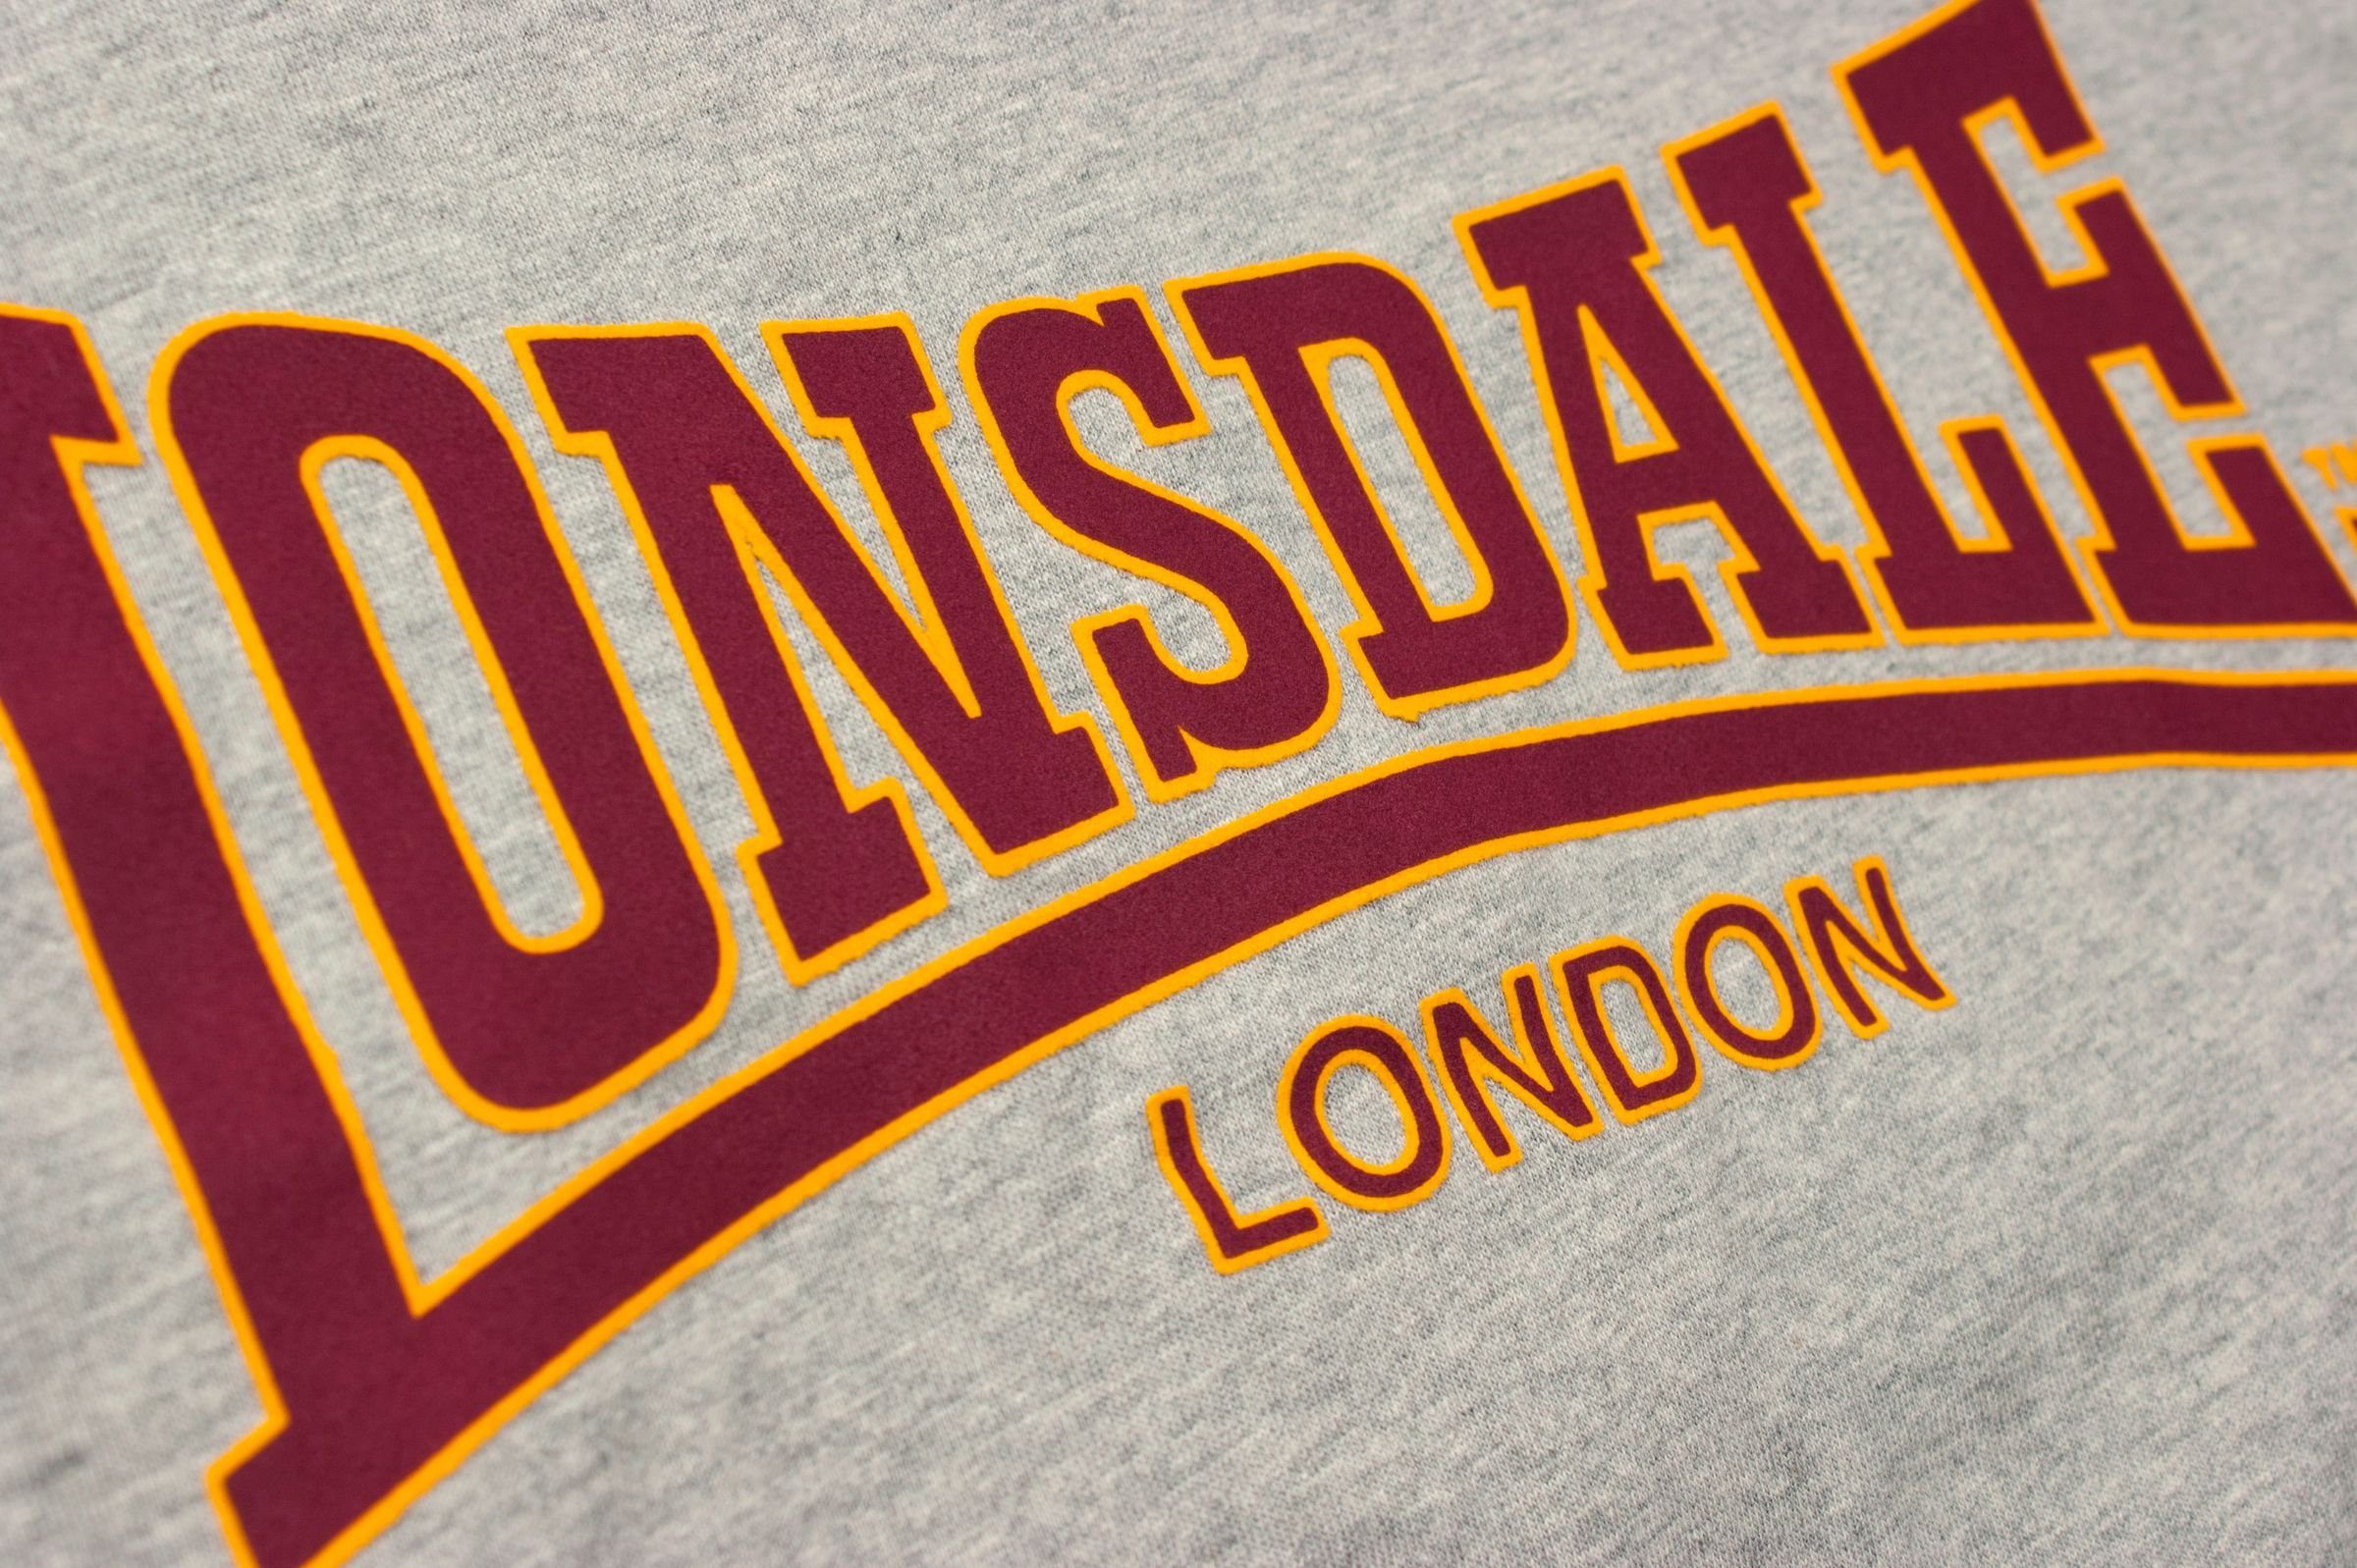 T-Shirt Lonsdale Classic grey Adult Lonsdale T-Shirt marl Herren